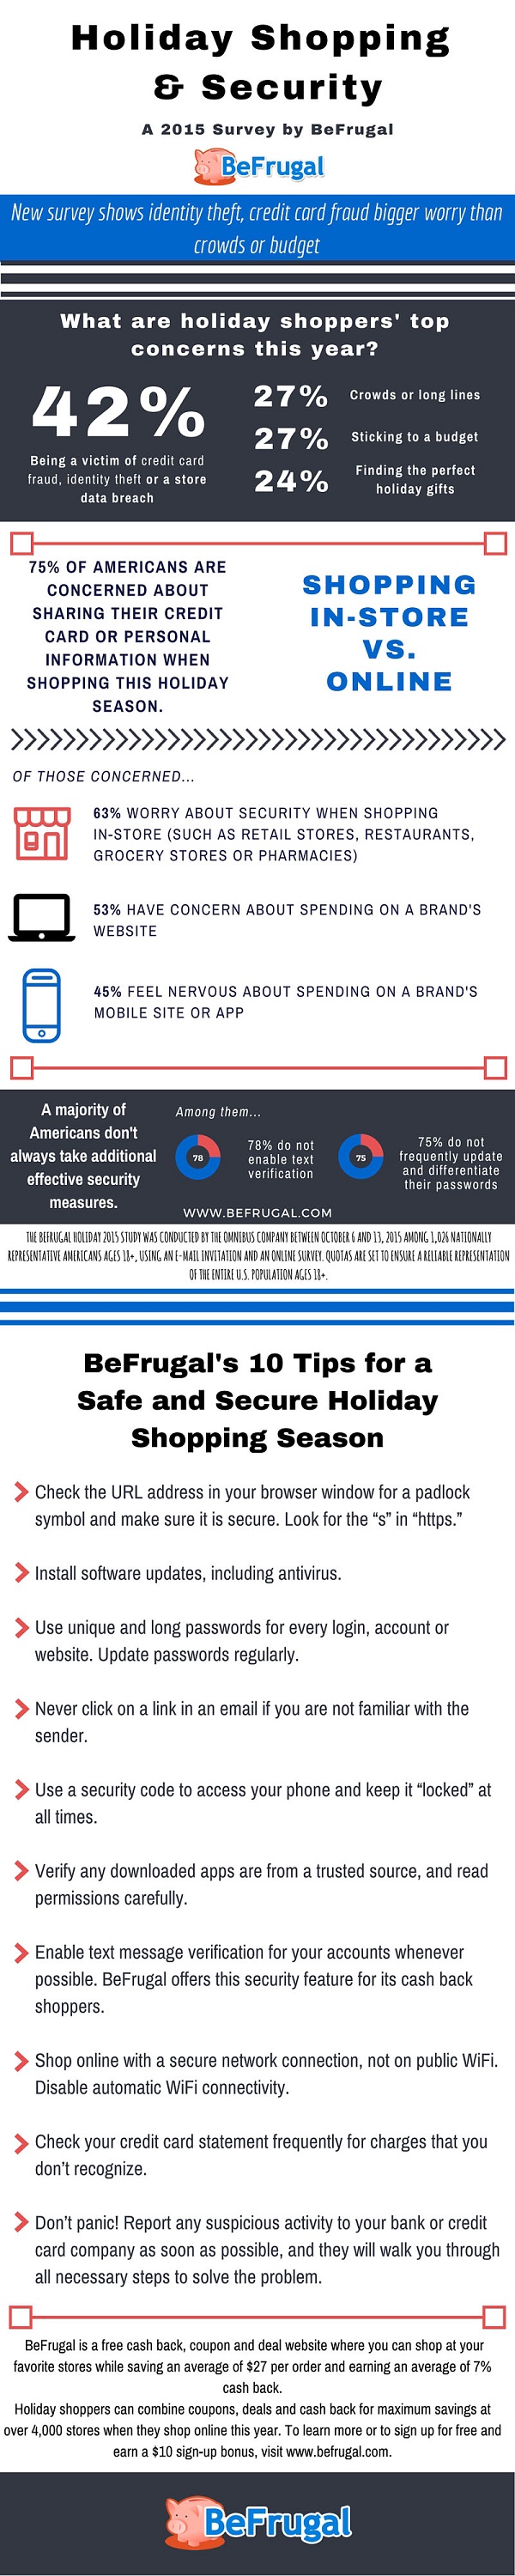 Holiday Shopping Survey Infographic